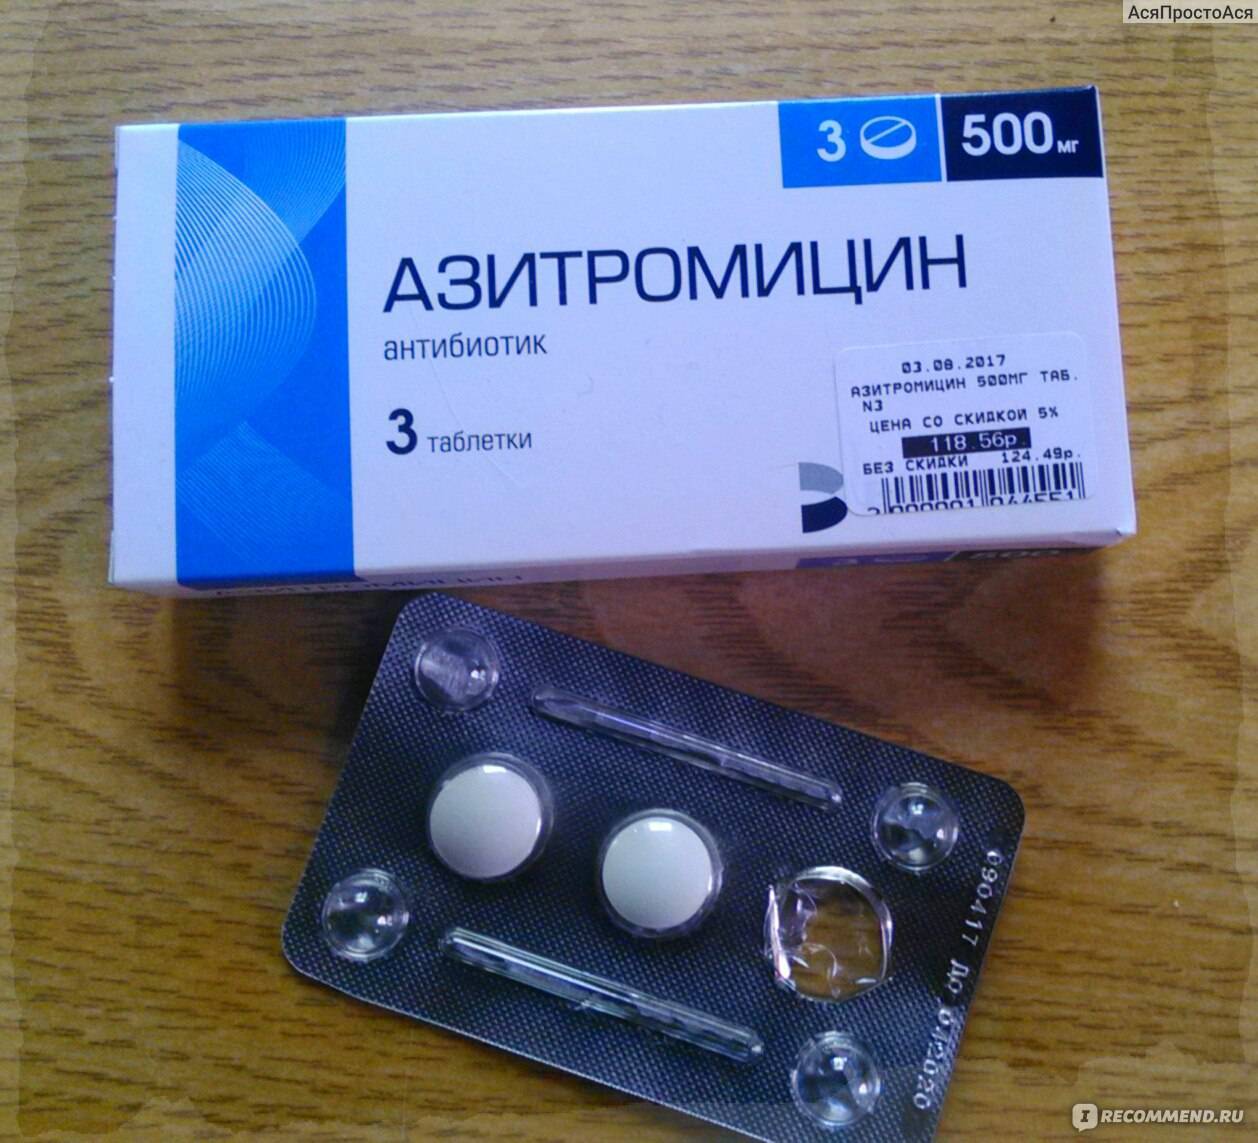 Сильные хорошие антибиотики. Антибиотик три таблетки Азитромицин. Таблетки 3 шт антибиотики Азитромицин. Три таблетки от простуды антибиотик Азитромицин. Антибиотик azithromycin 500.